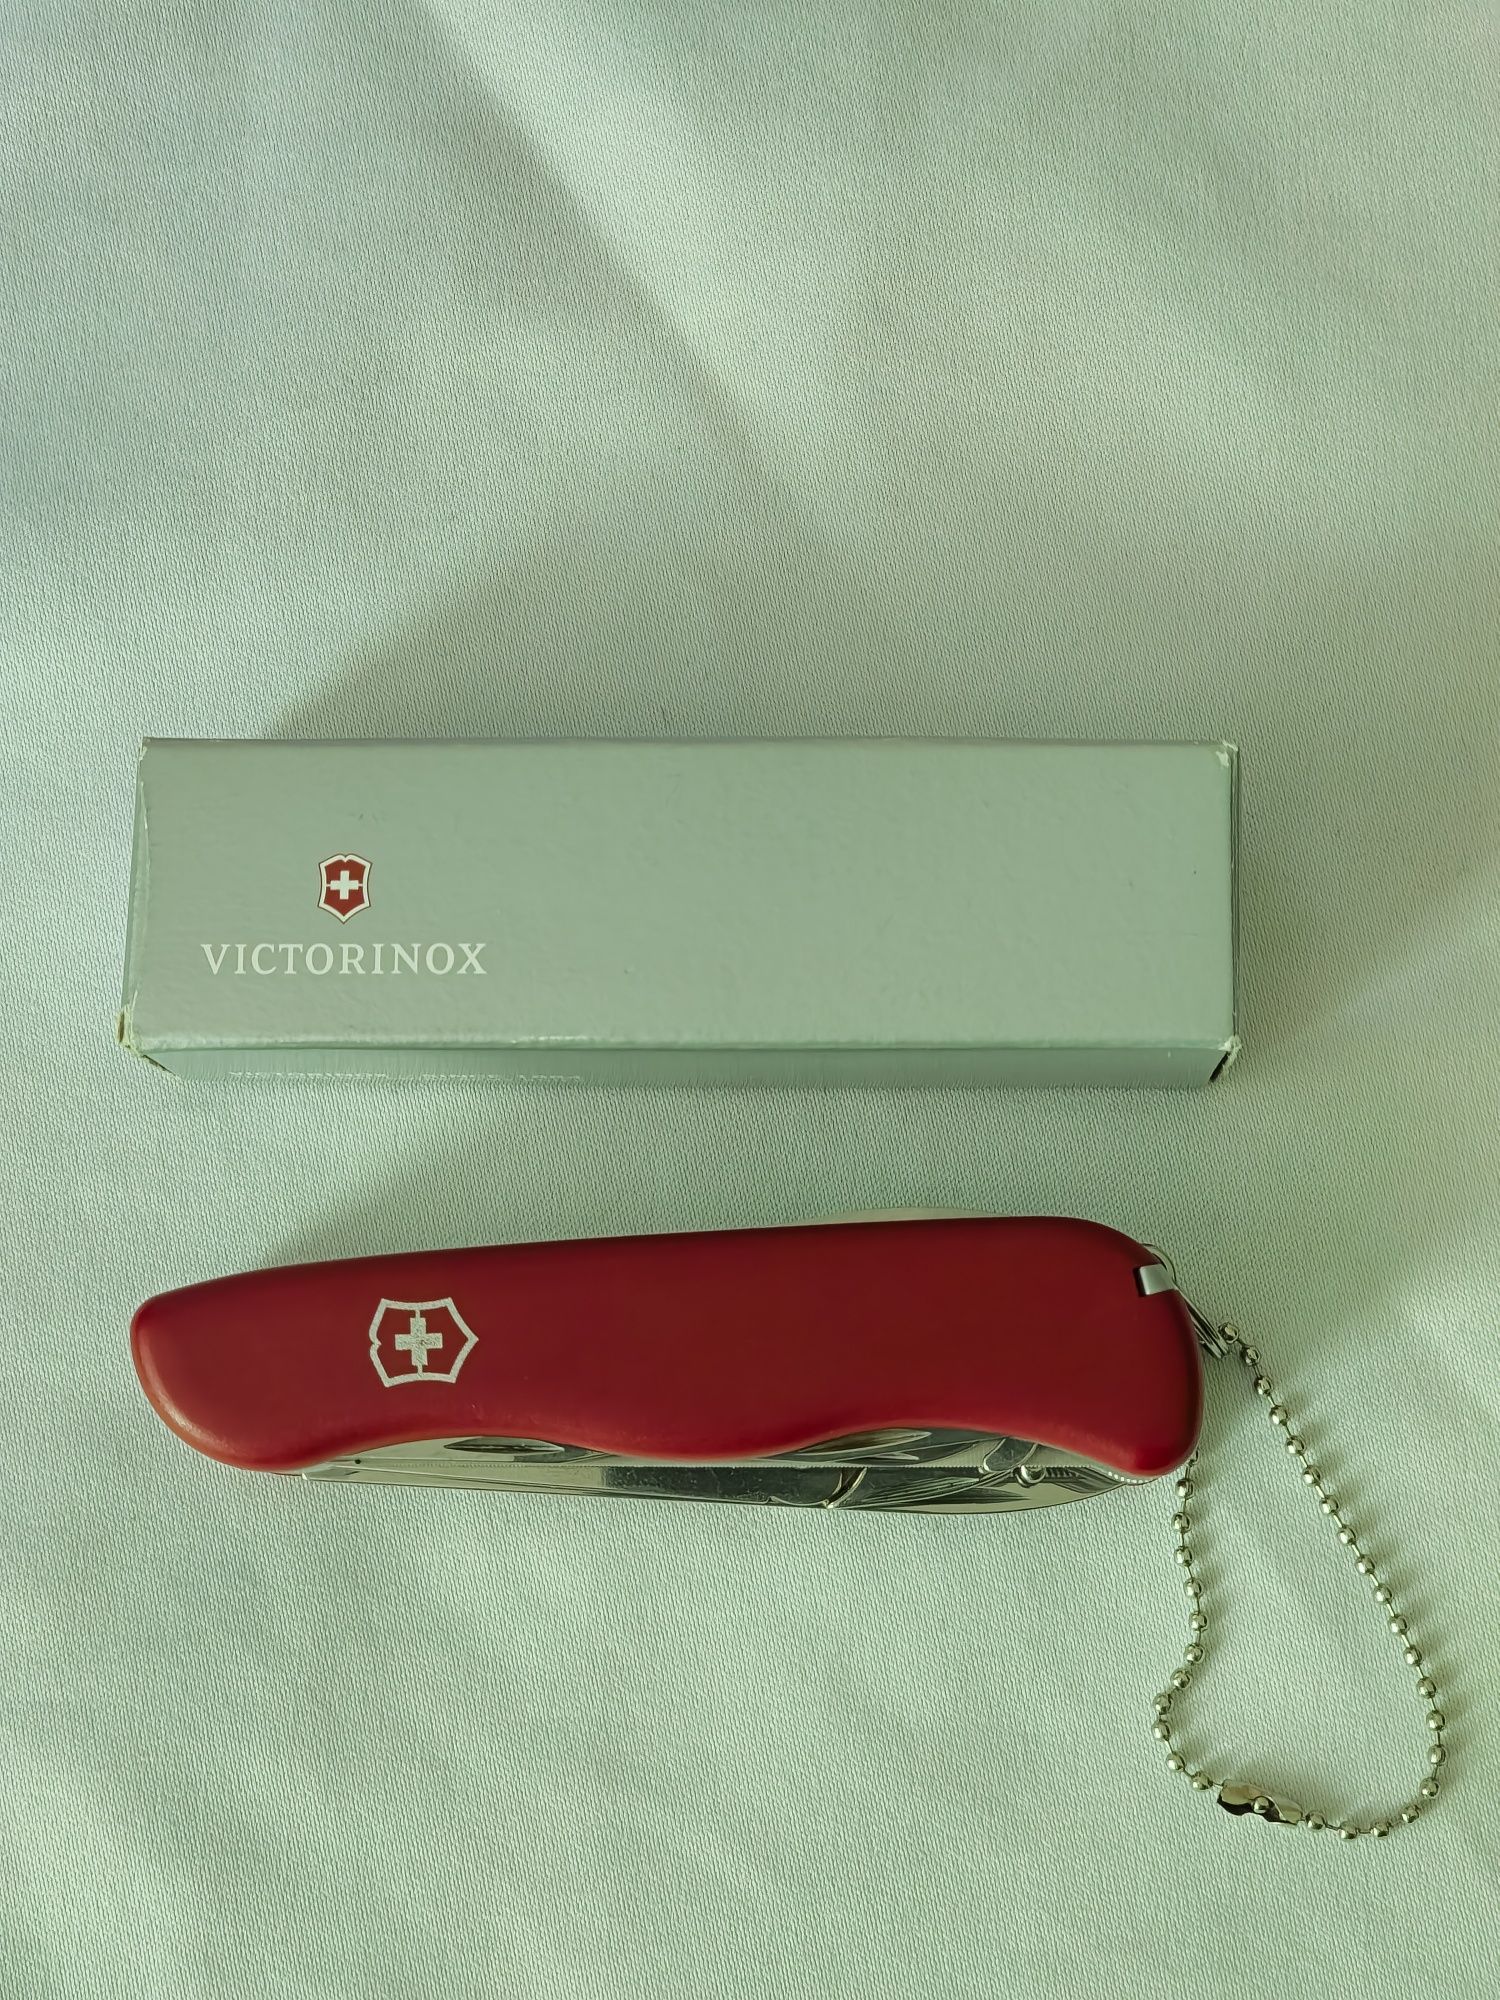 The original swiss army knife VICTORINOX "WorkChamp 0.9064 red"